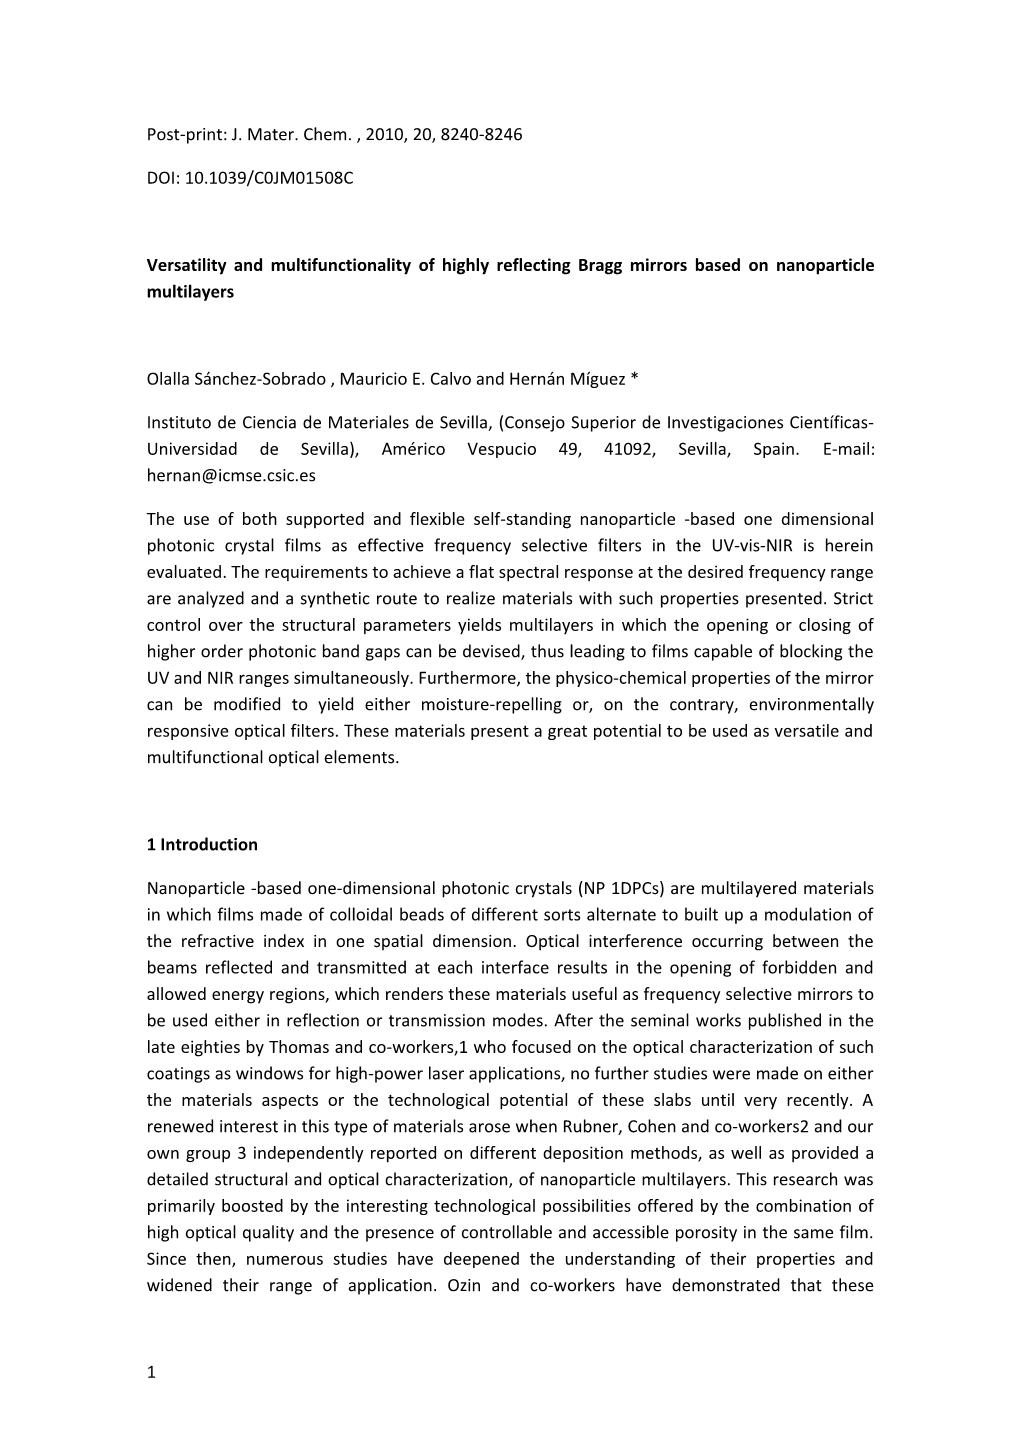 Post-Print: J. Mater. Chem. , 2010, 20, 8240-8246